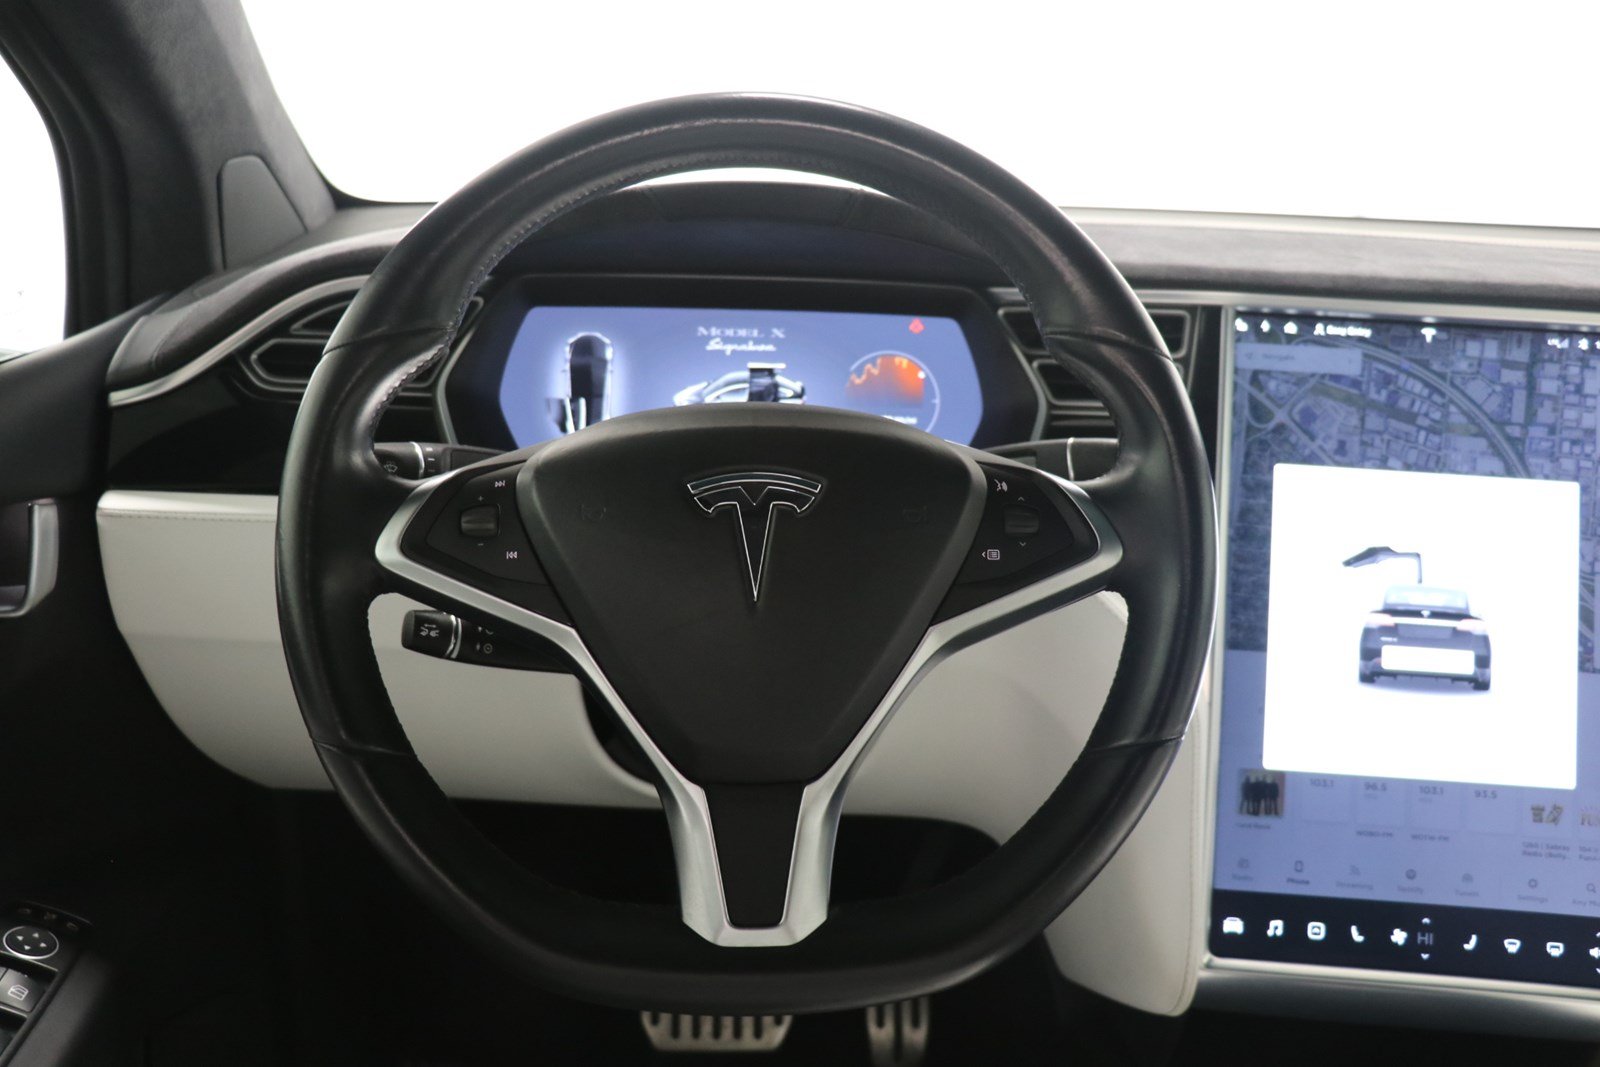 Pre Owned 2016 Tesla Model X P90d